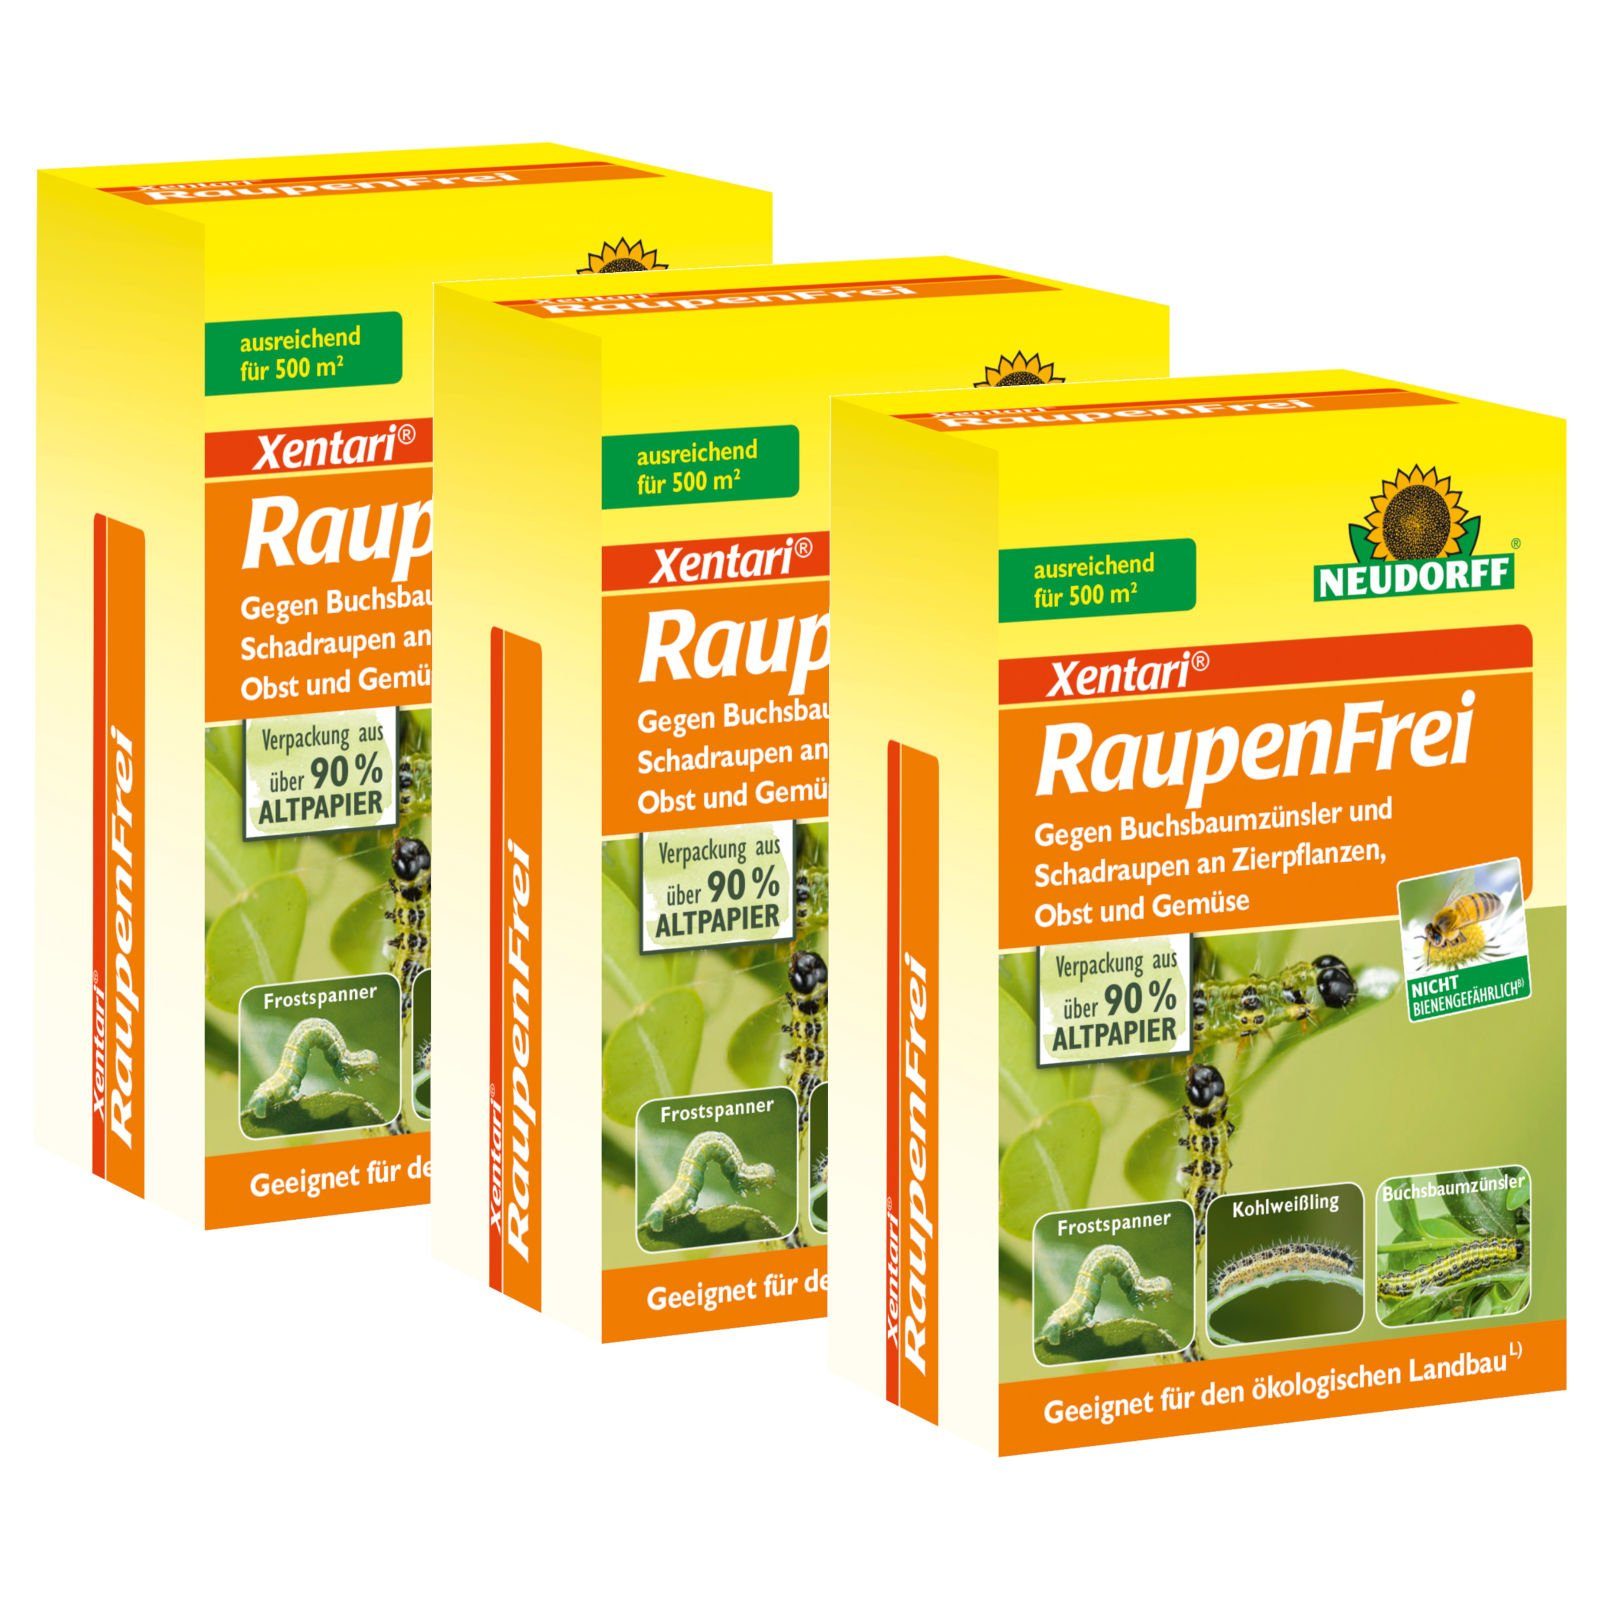 Neudorff 25 Insektenvernichtungsmittel 3x - Raupenfrei g XenTari